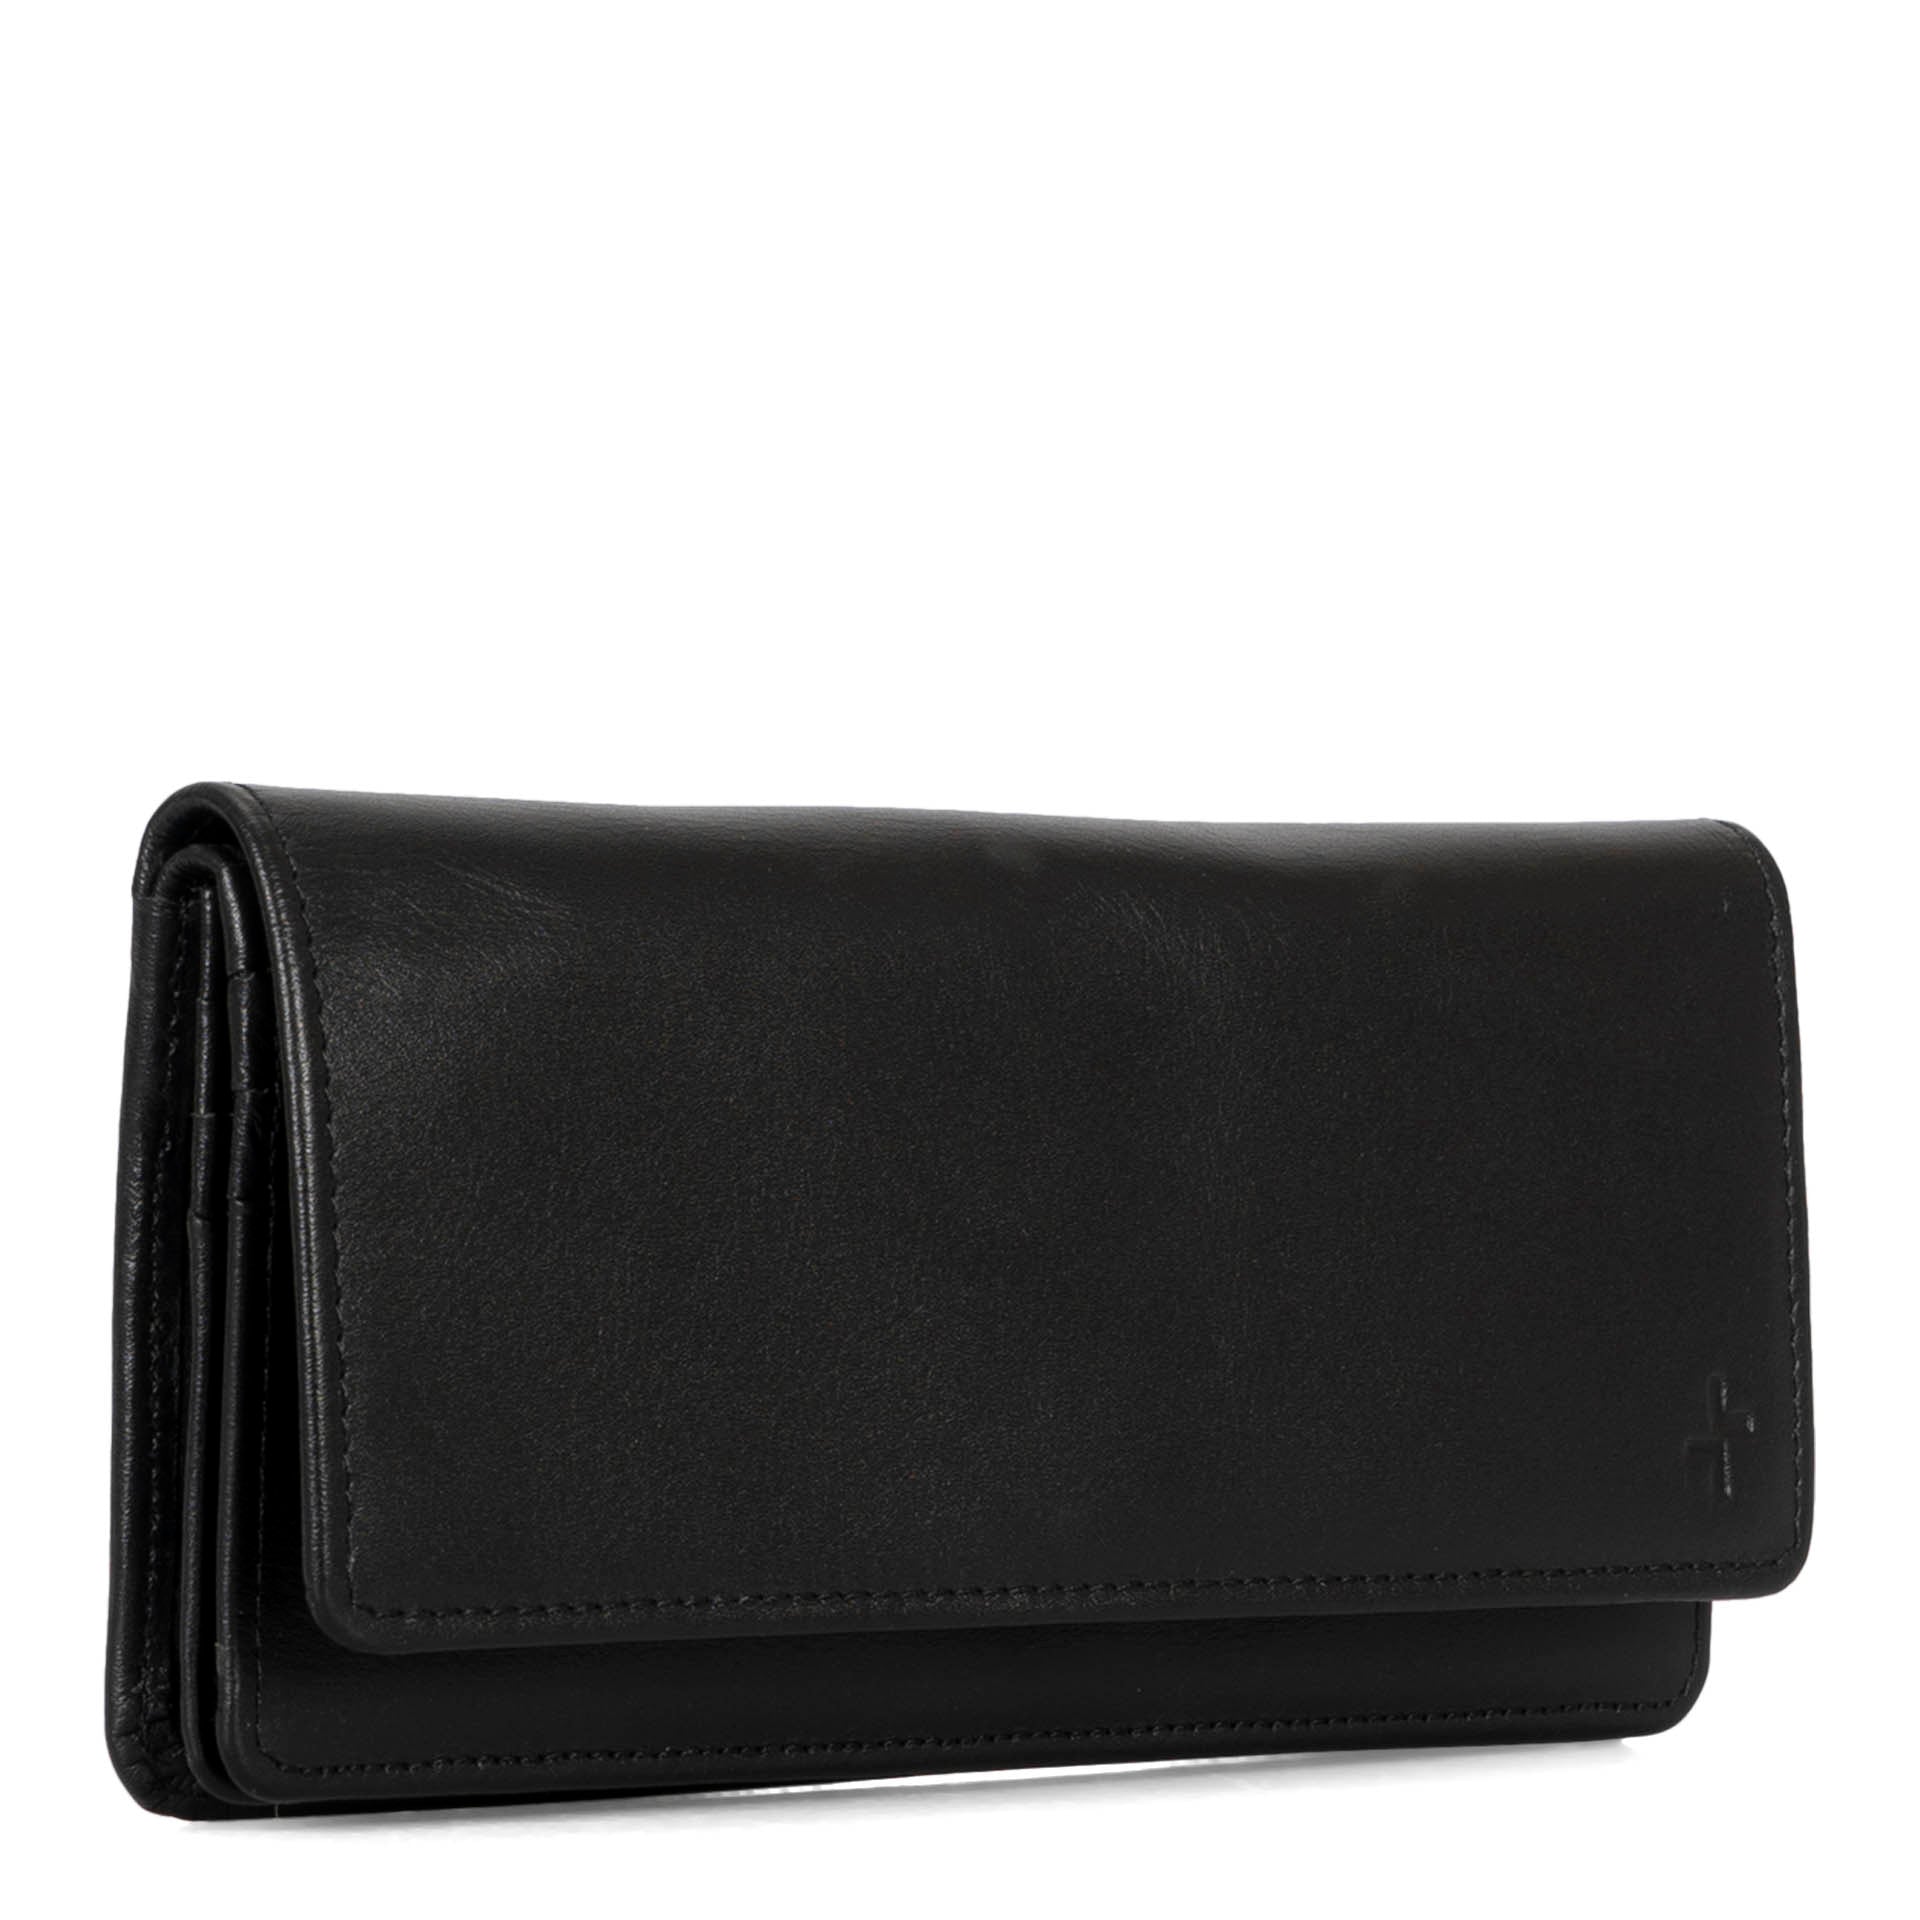 Kelly RFID Leather Wallet